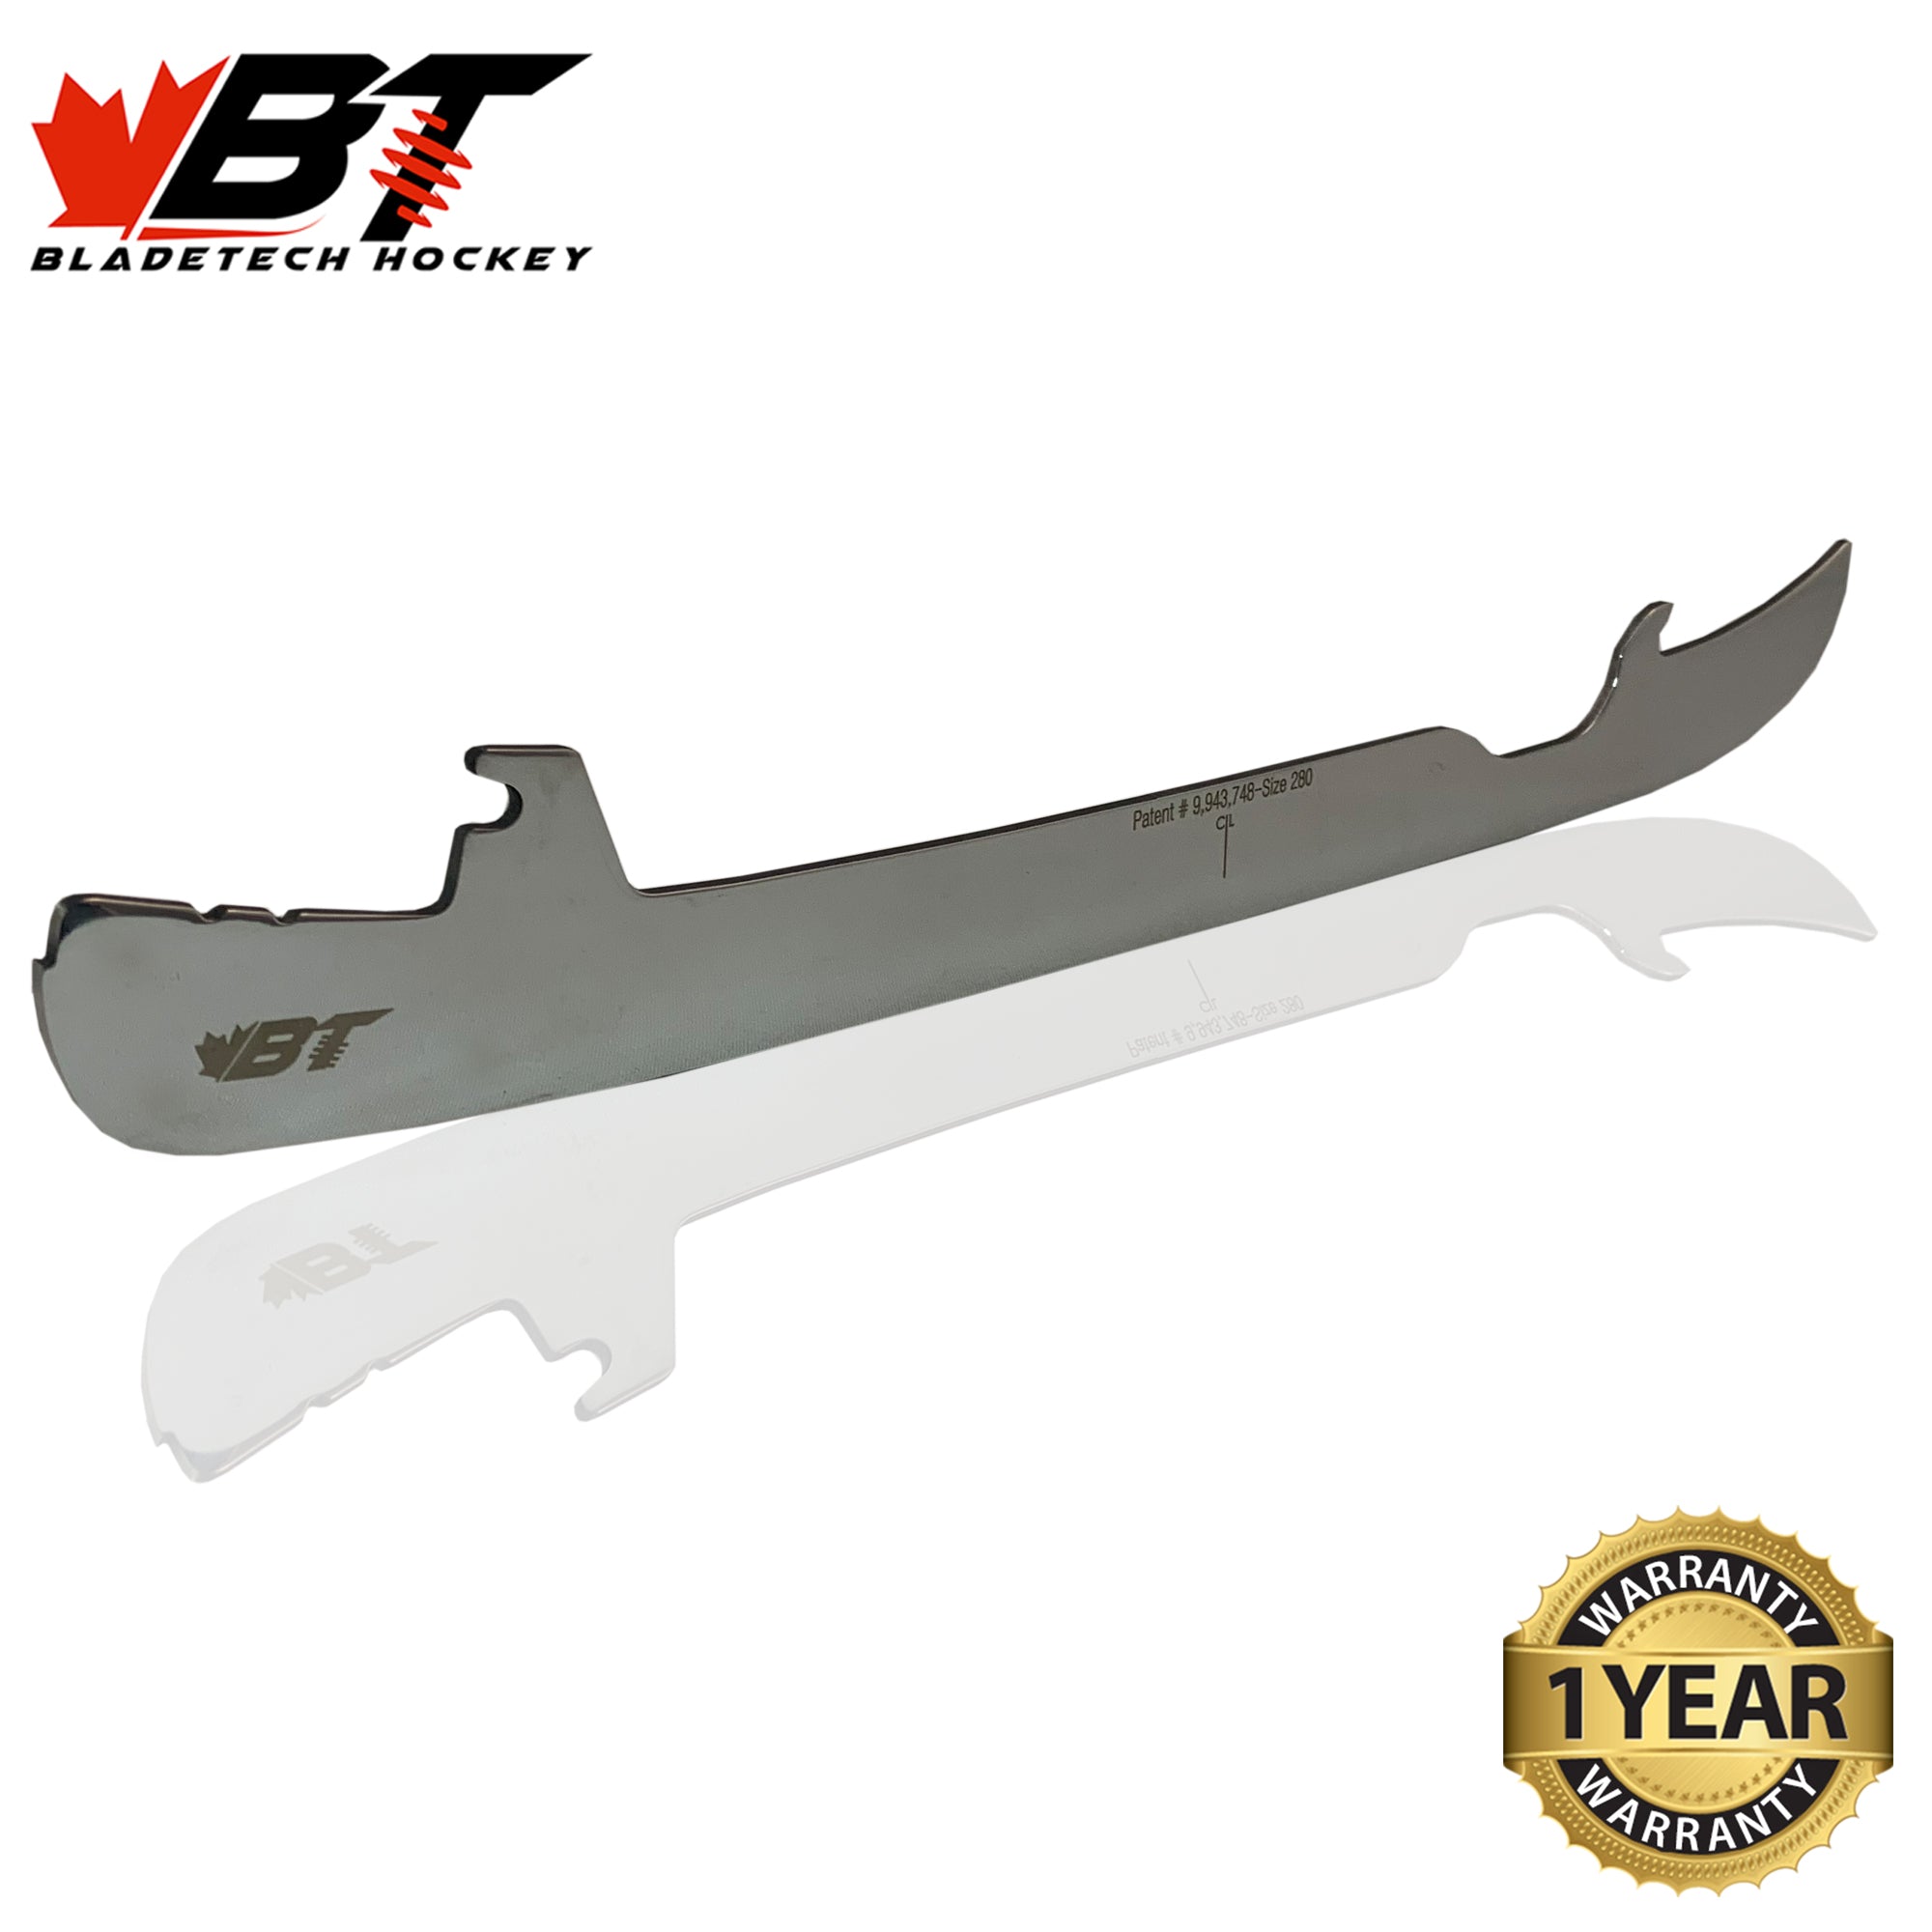 Bladetech Mirror Stainless Steel Blades - SB XS - Tydan Specialty Blades Inc. (Canada)